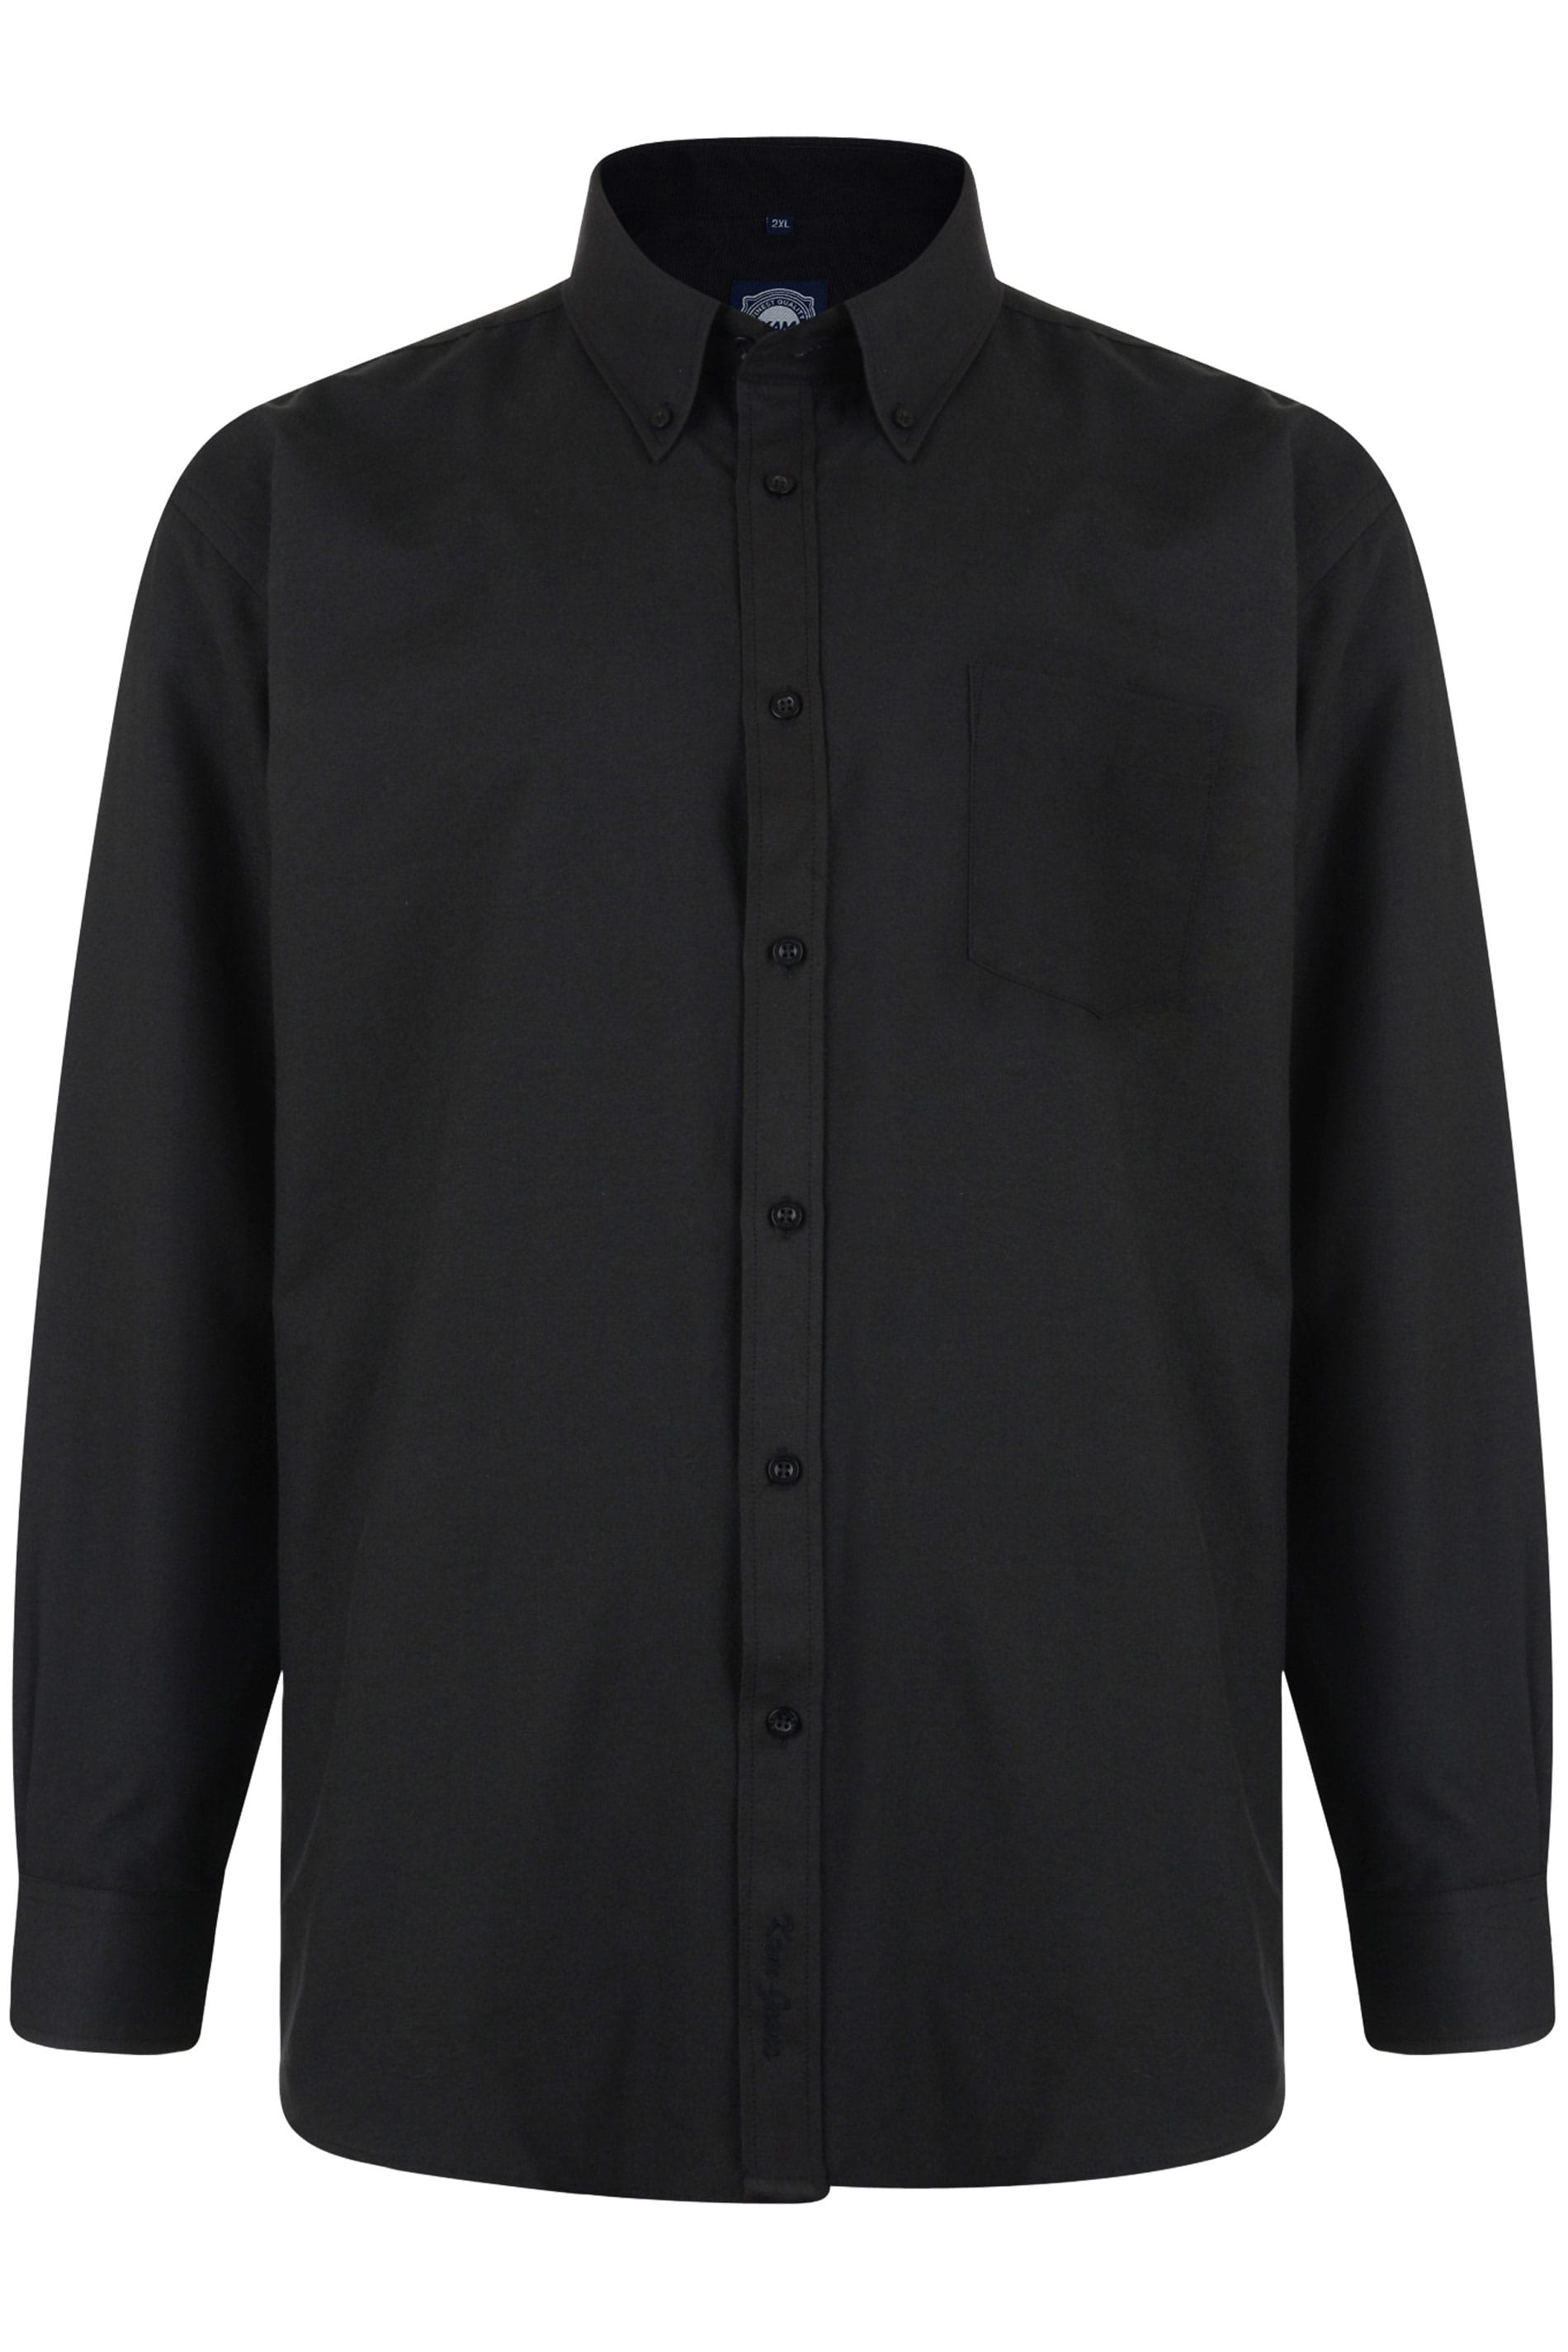 KAM Big & Tall Black Oxford Long Sleeve Shirt | BadRhino